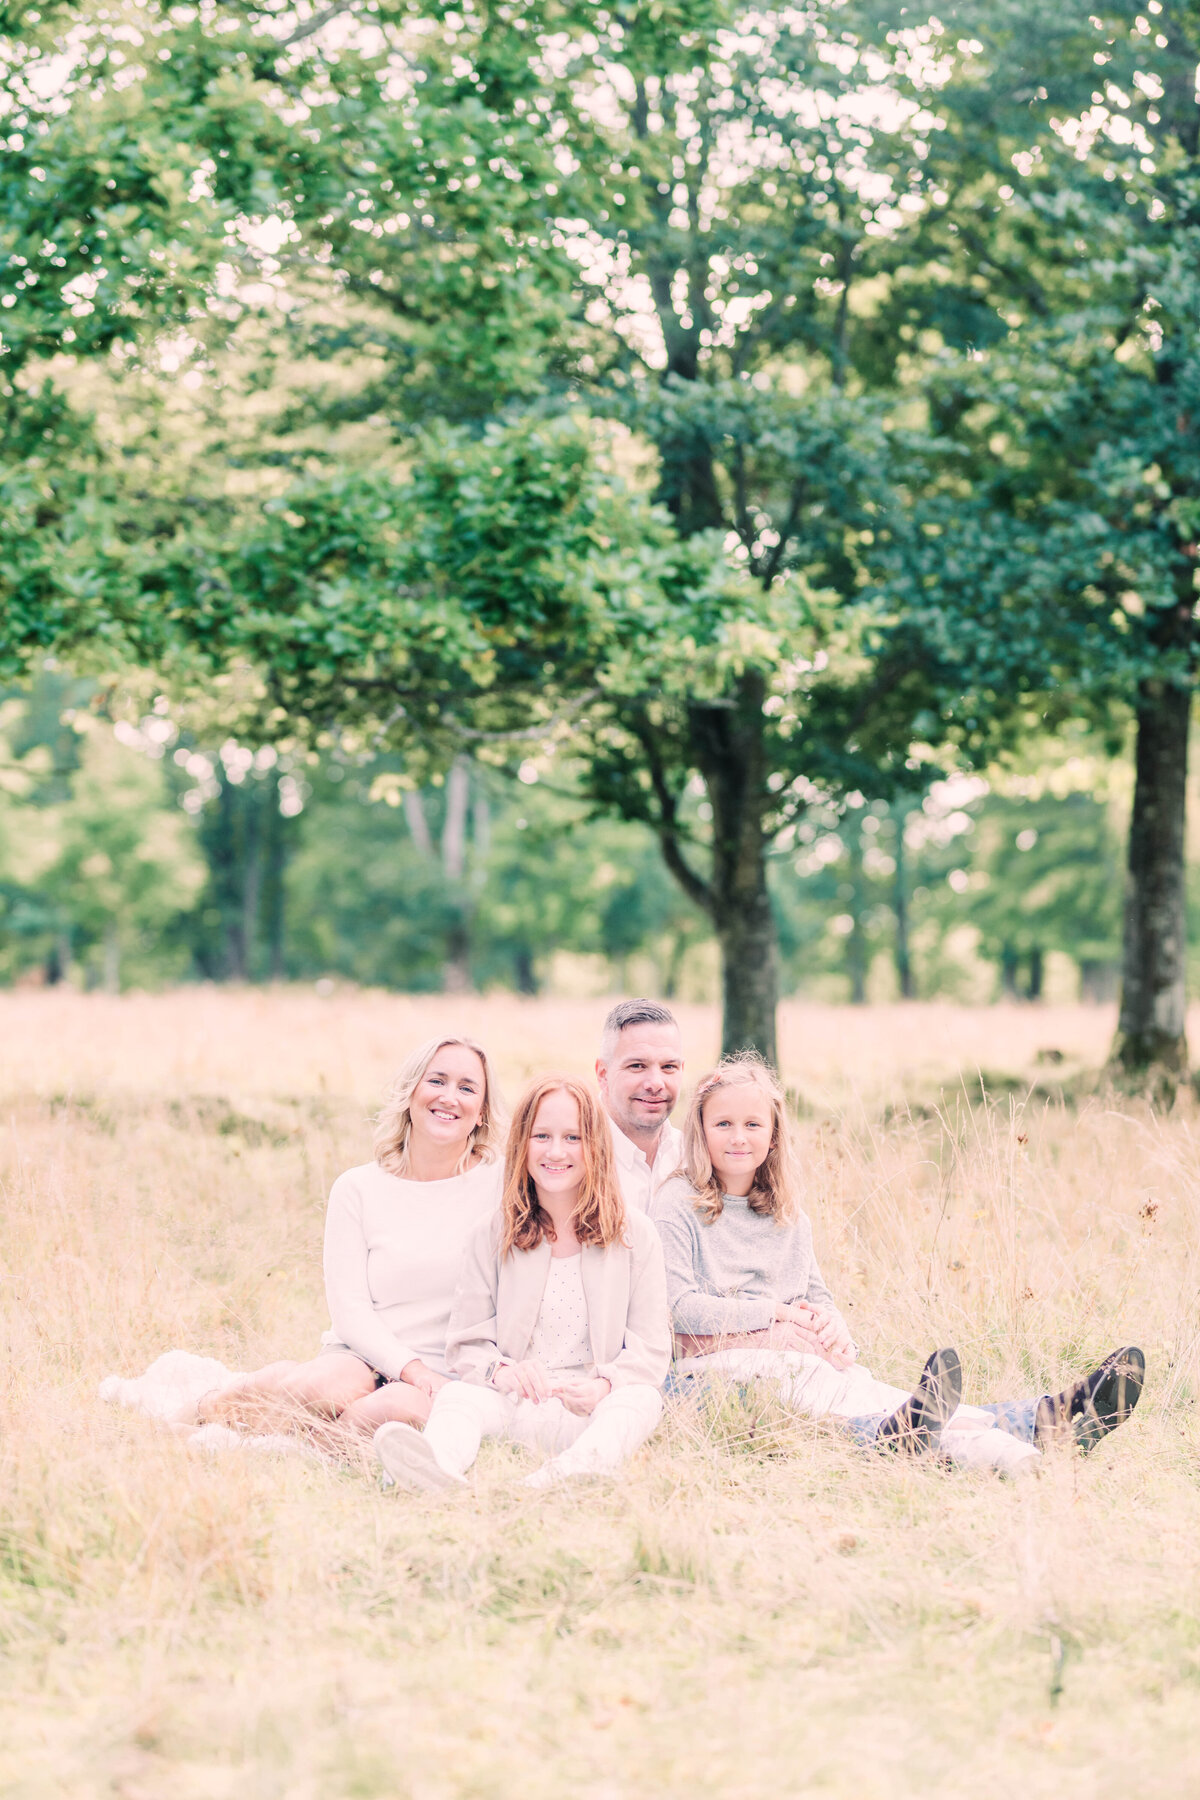 Familjefotograf Småland, Familjefotografering Småland, Familjefotograf Gnosjö, Barnfotograf Gnosjö, Barnfotograf Småland, Fotograf Värnamo, Syskonfotografering, Familjefotograf Värnamo